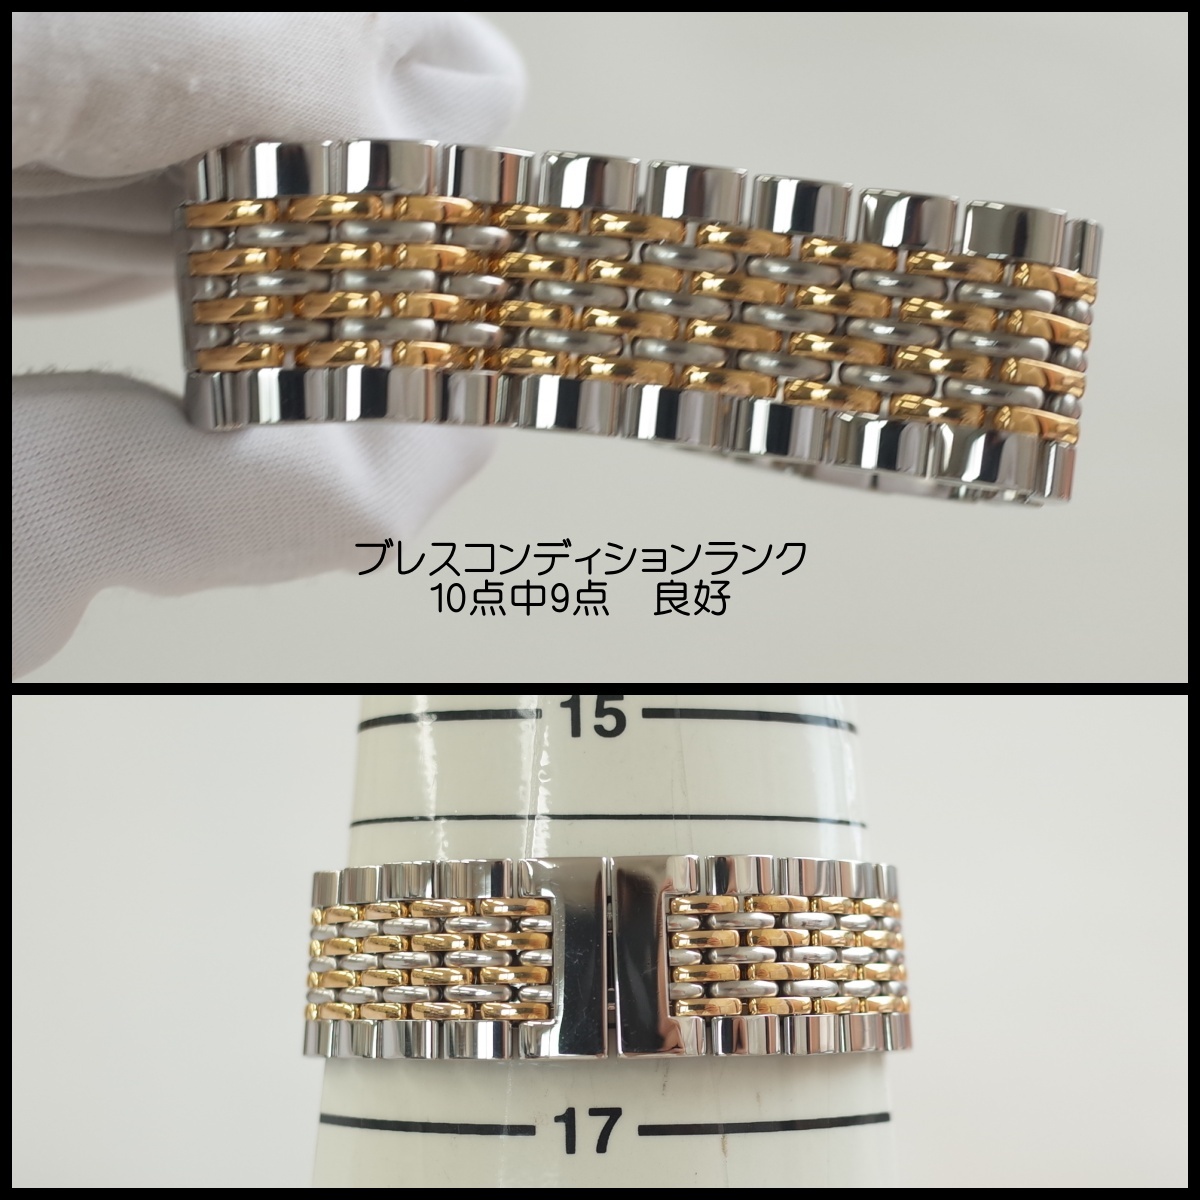  Chaumet stay rudu Chaumet wide width breath combination jewelry watch lady's quartz wristwatch CHAUMET maintenance settled 1 year guarantee 